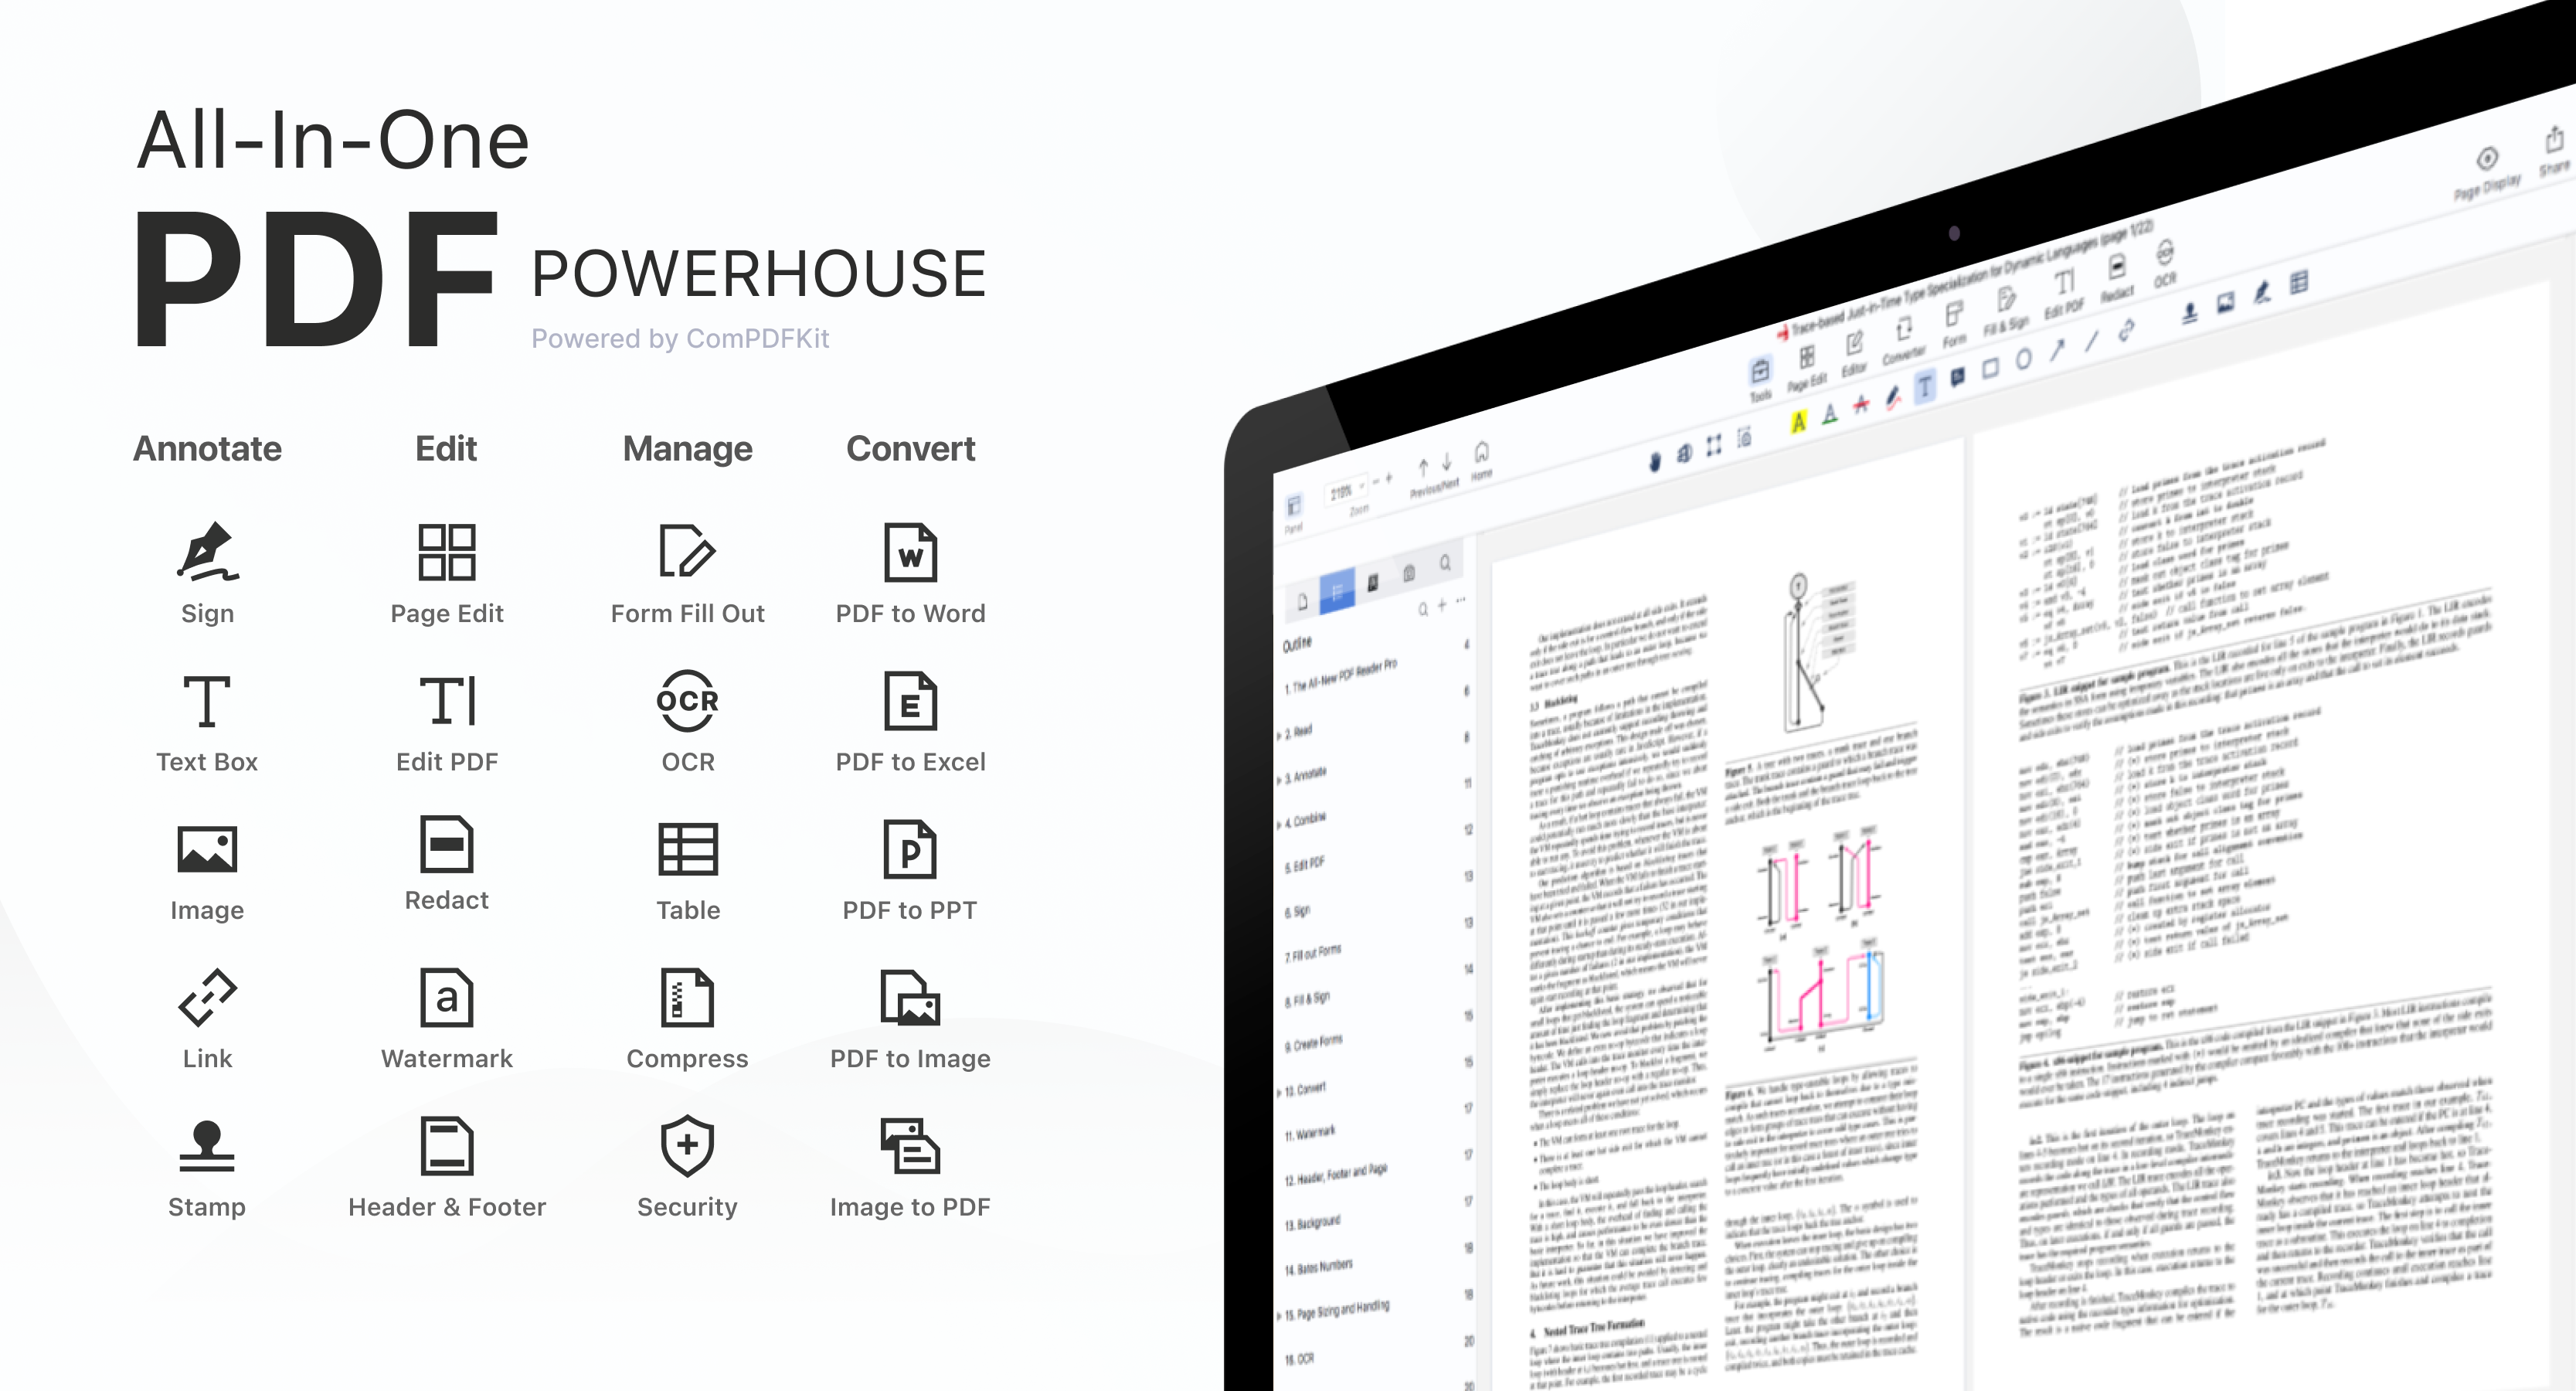 All-in-one PDF Powerhouse